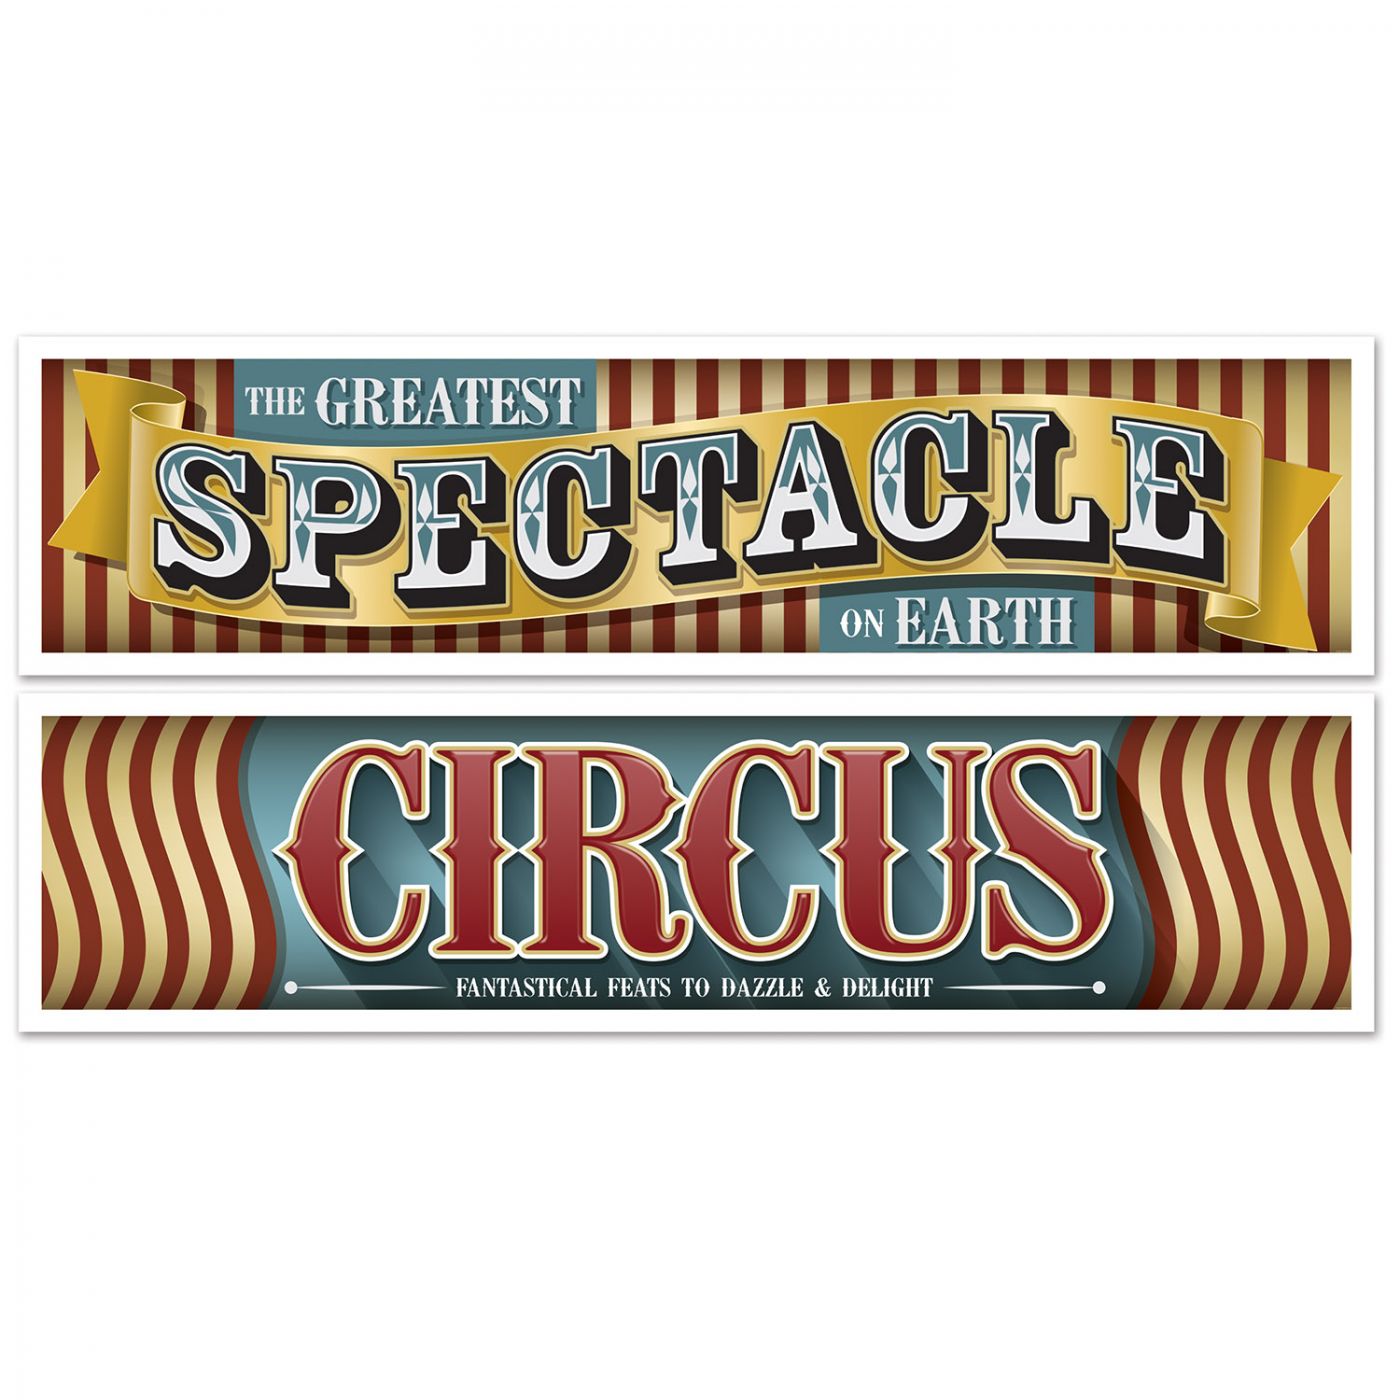 Vintage Circus Banners image